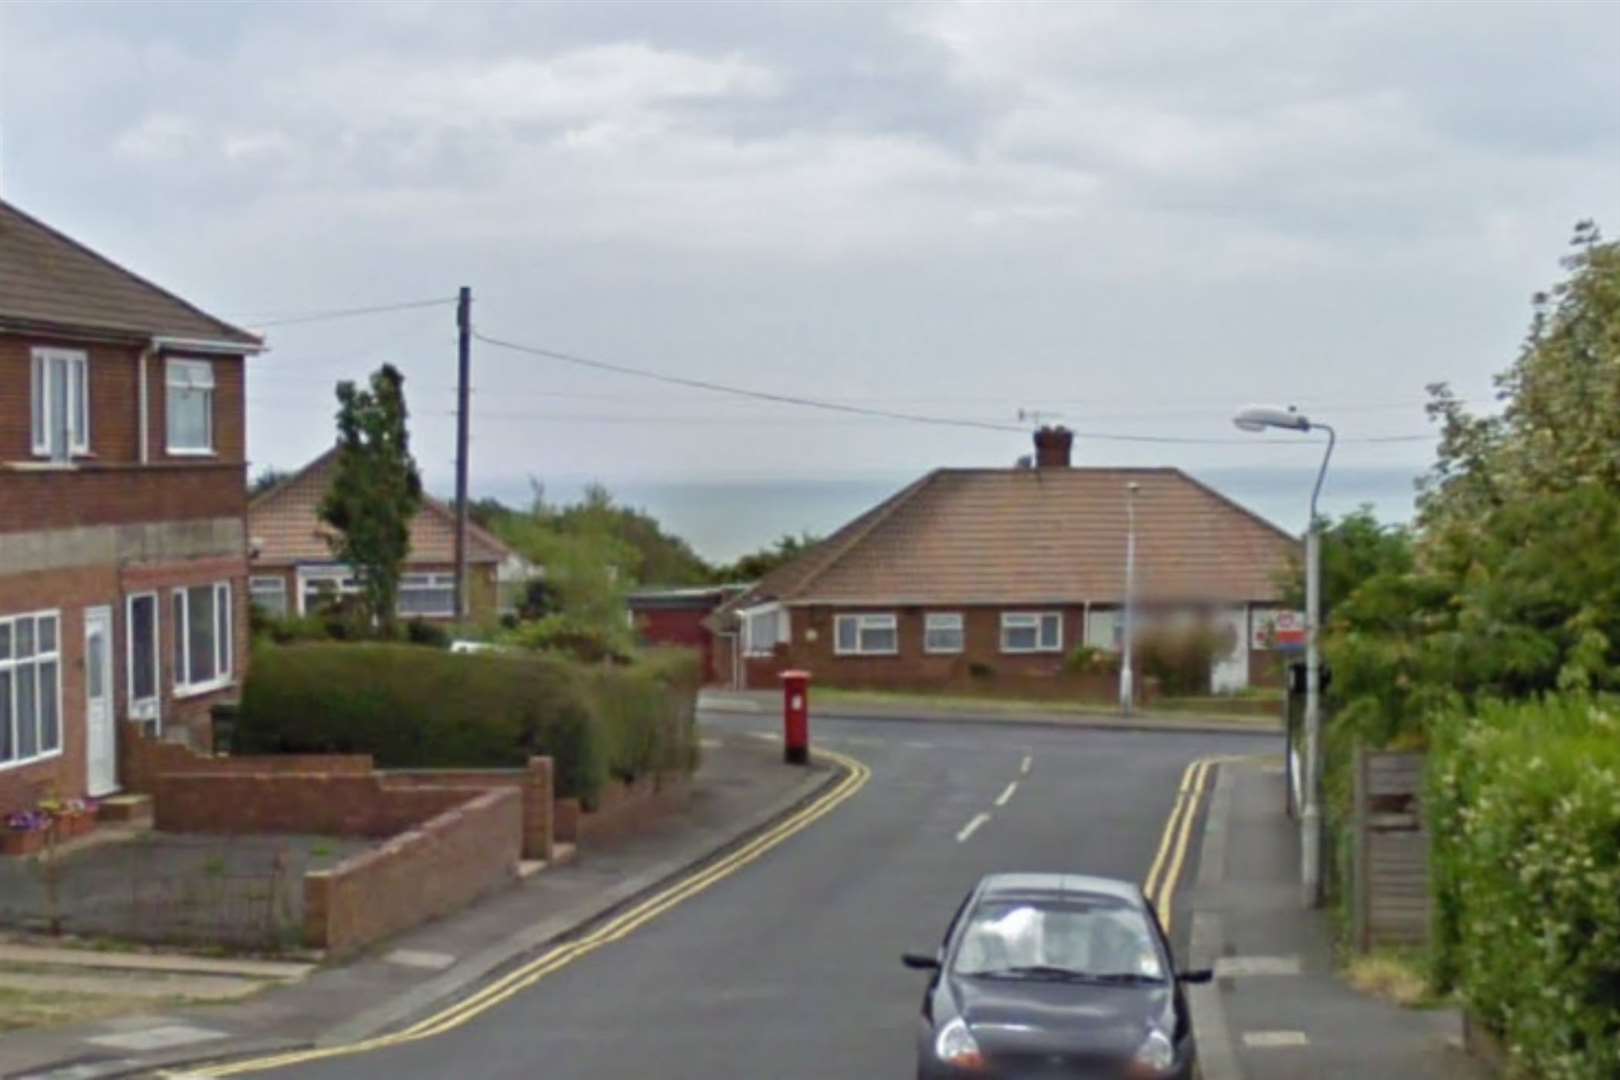 A child was found walking down Hollands Avenue near Wear Bay Road in Folkestone. Photo: Google Street View